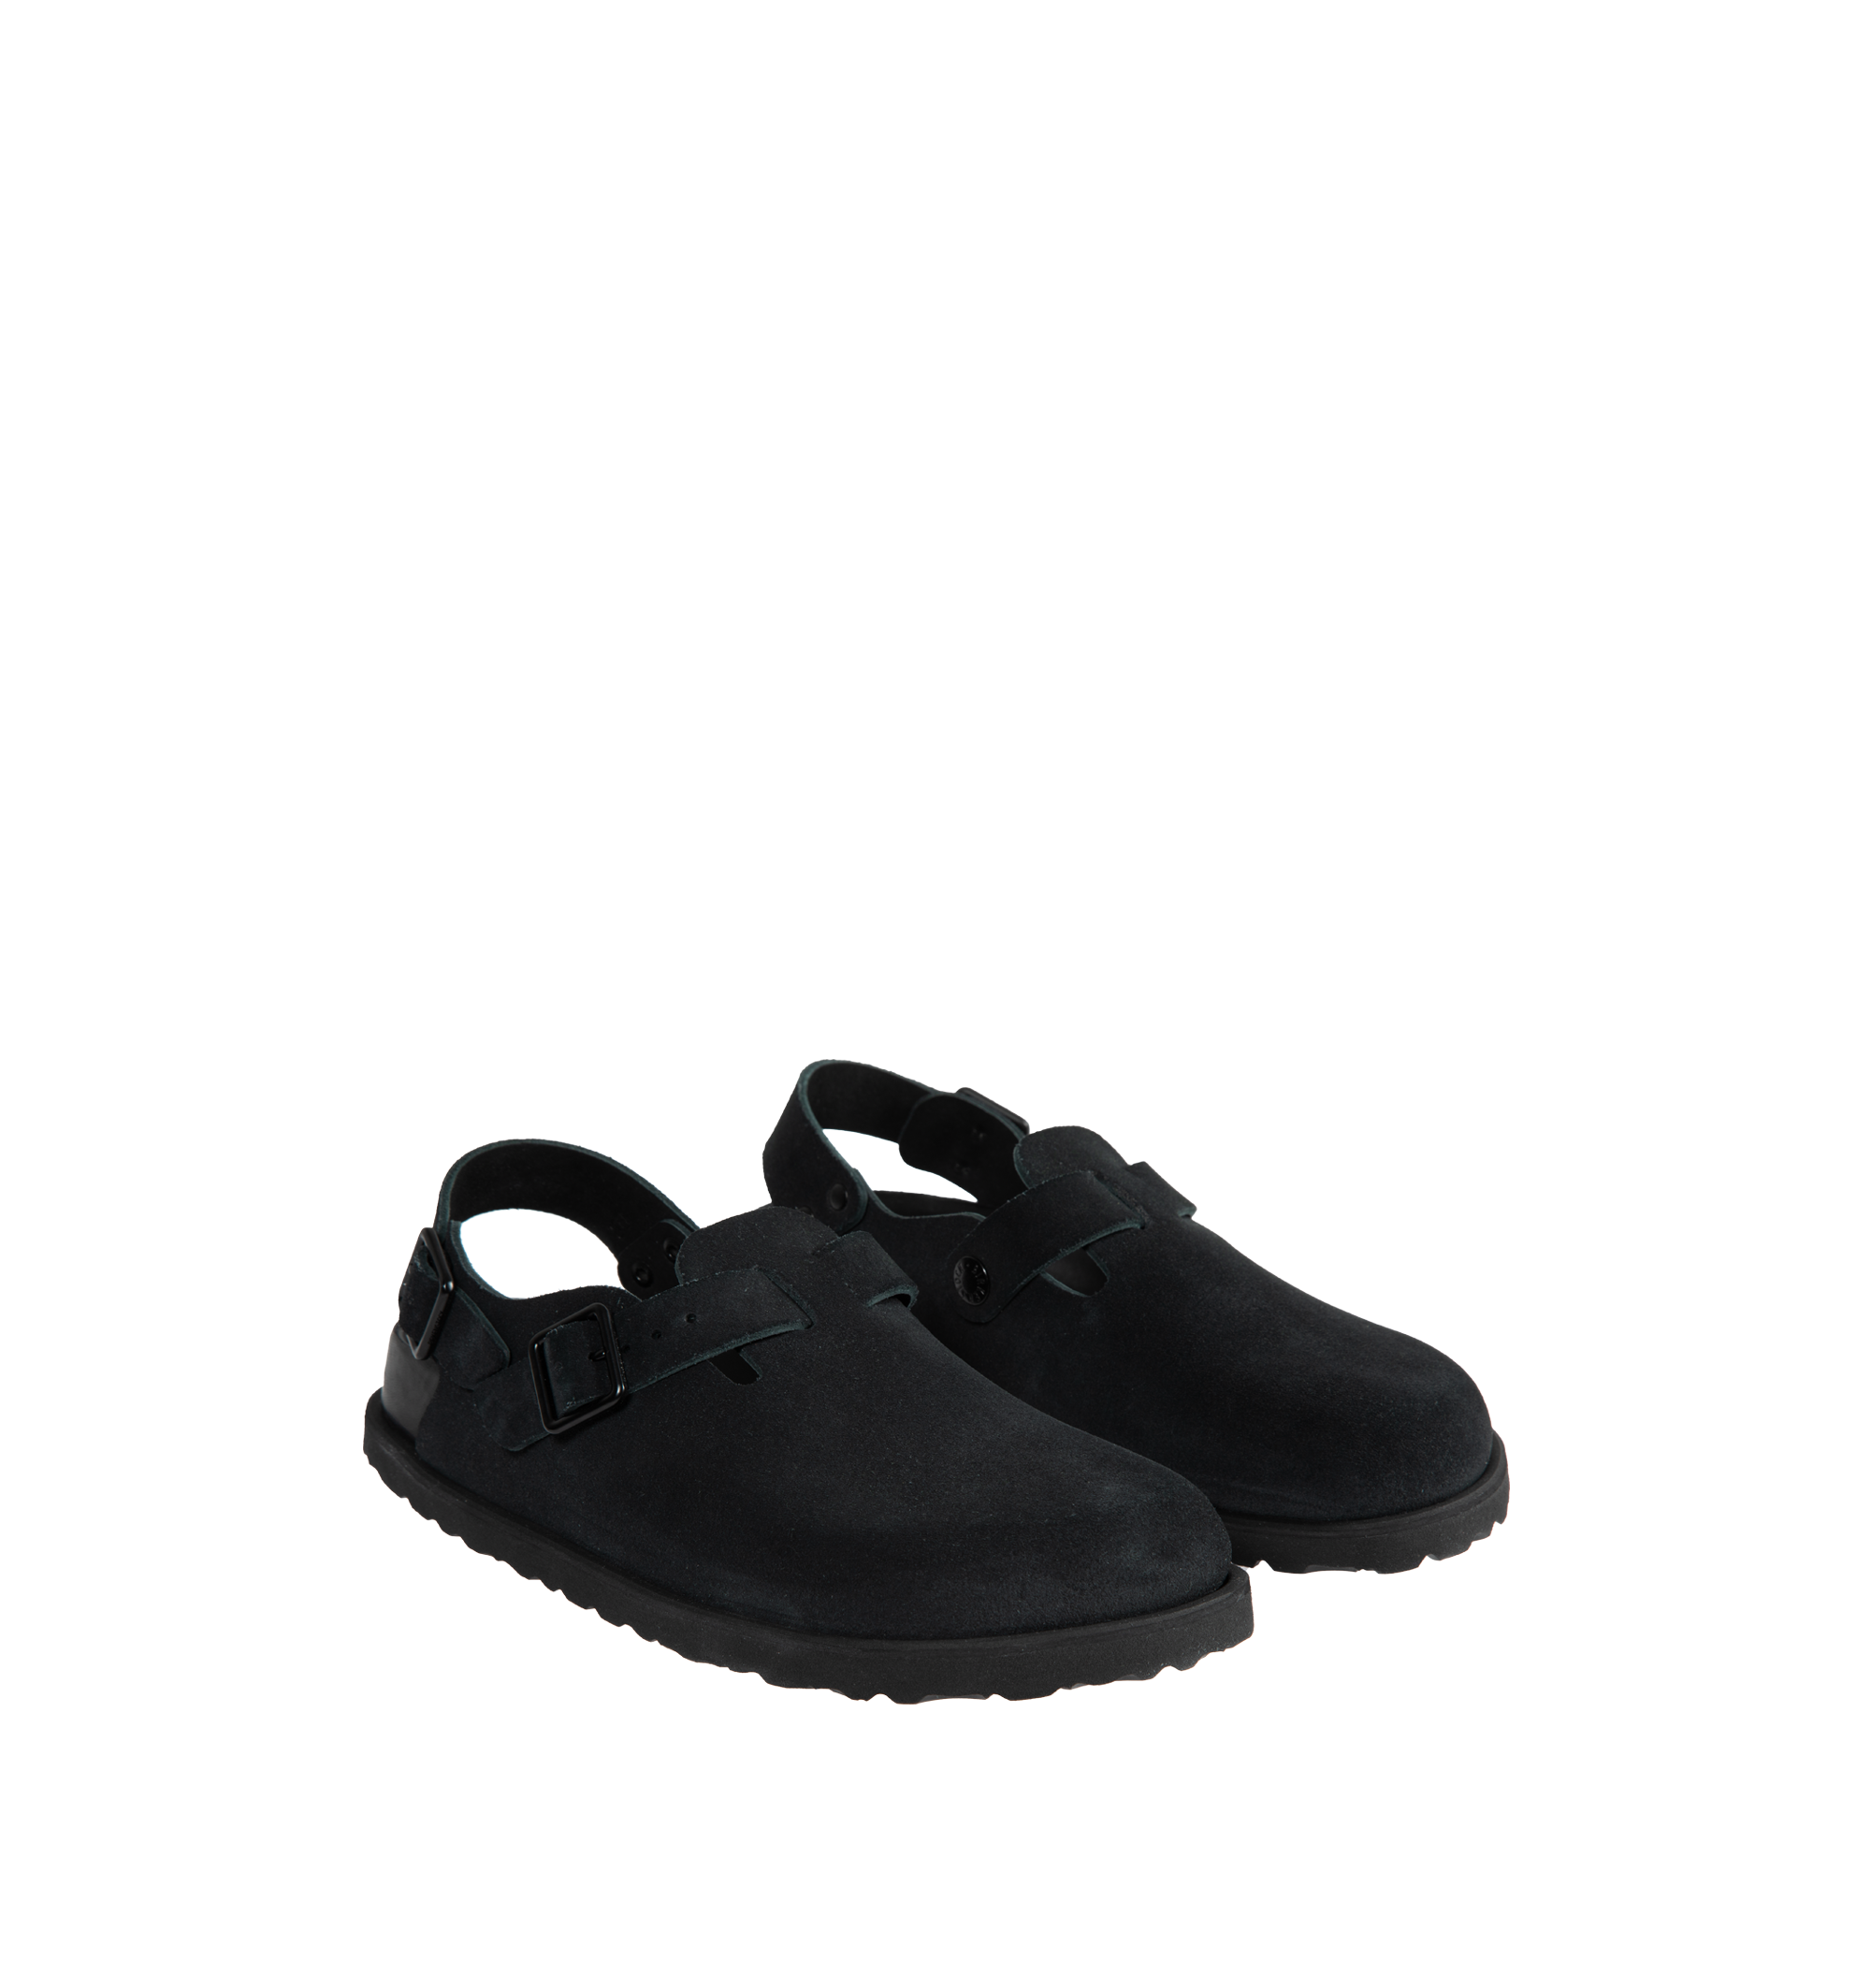 Birkenstock Betula Lace Up 3 Black Strap Women Sandal Sz 38 L7M5 245 mm |  eBay